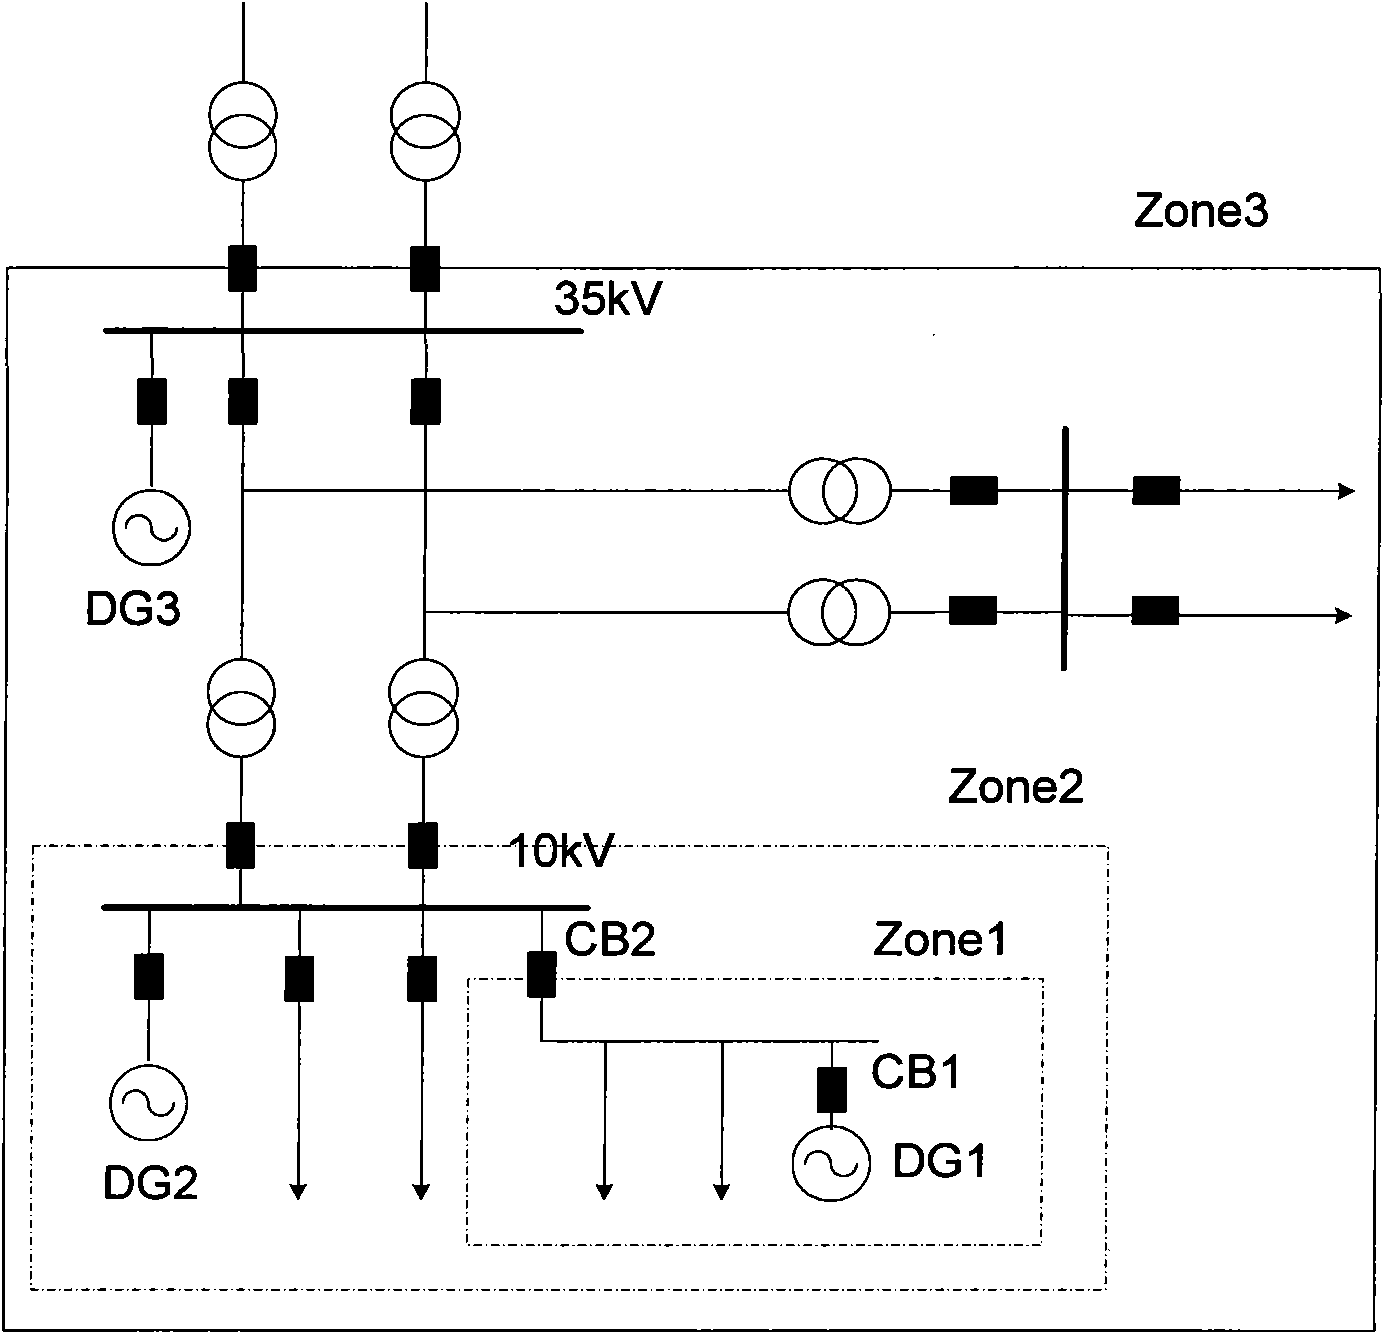 Distributed generator islanding detection method based on impedance measurement